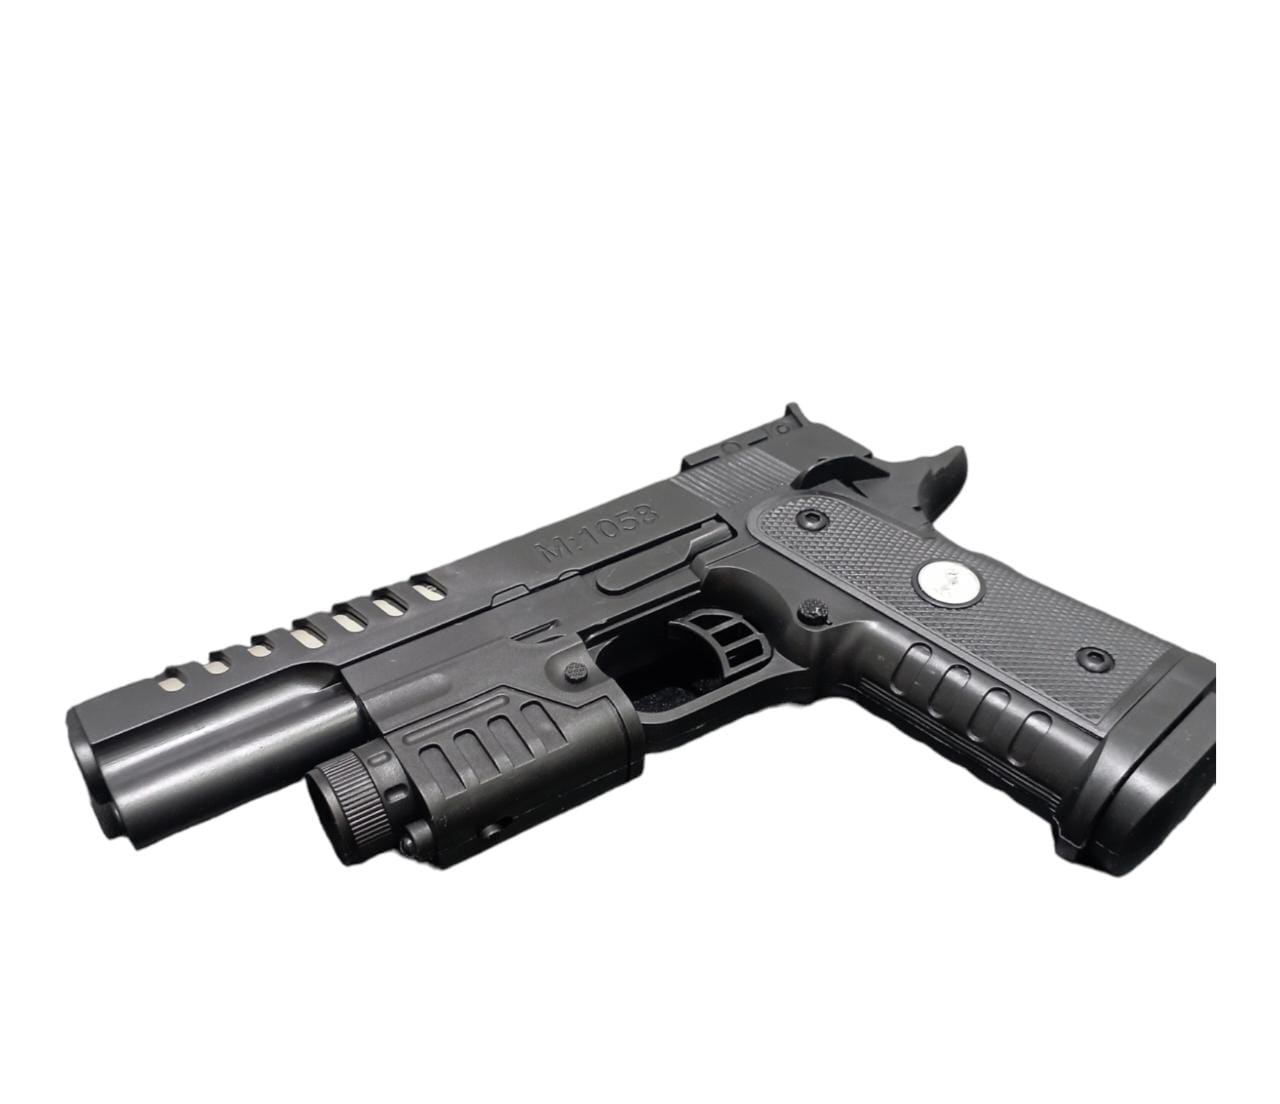 AIRSOFT GLOCK 17 (Pistola de juguete) – Andzur_store